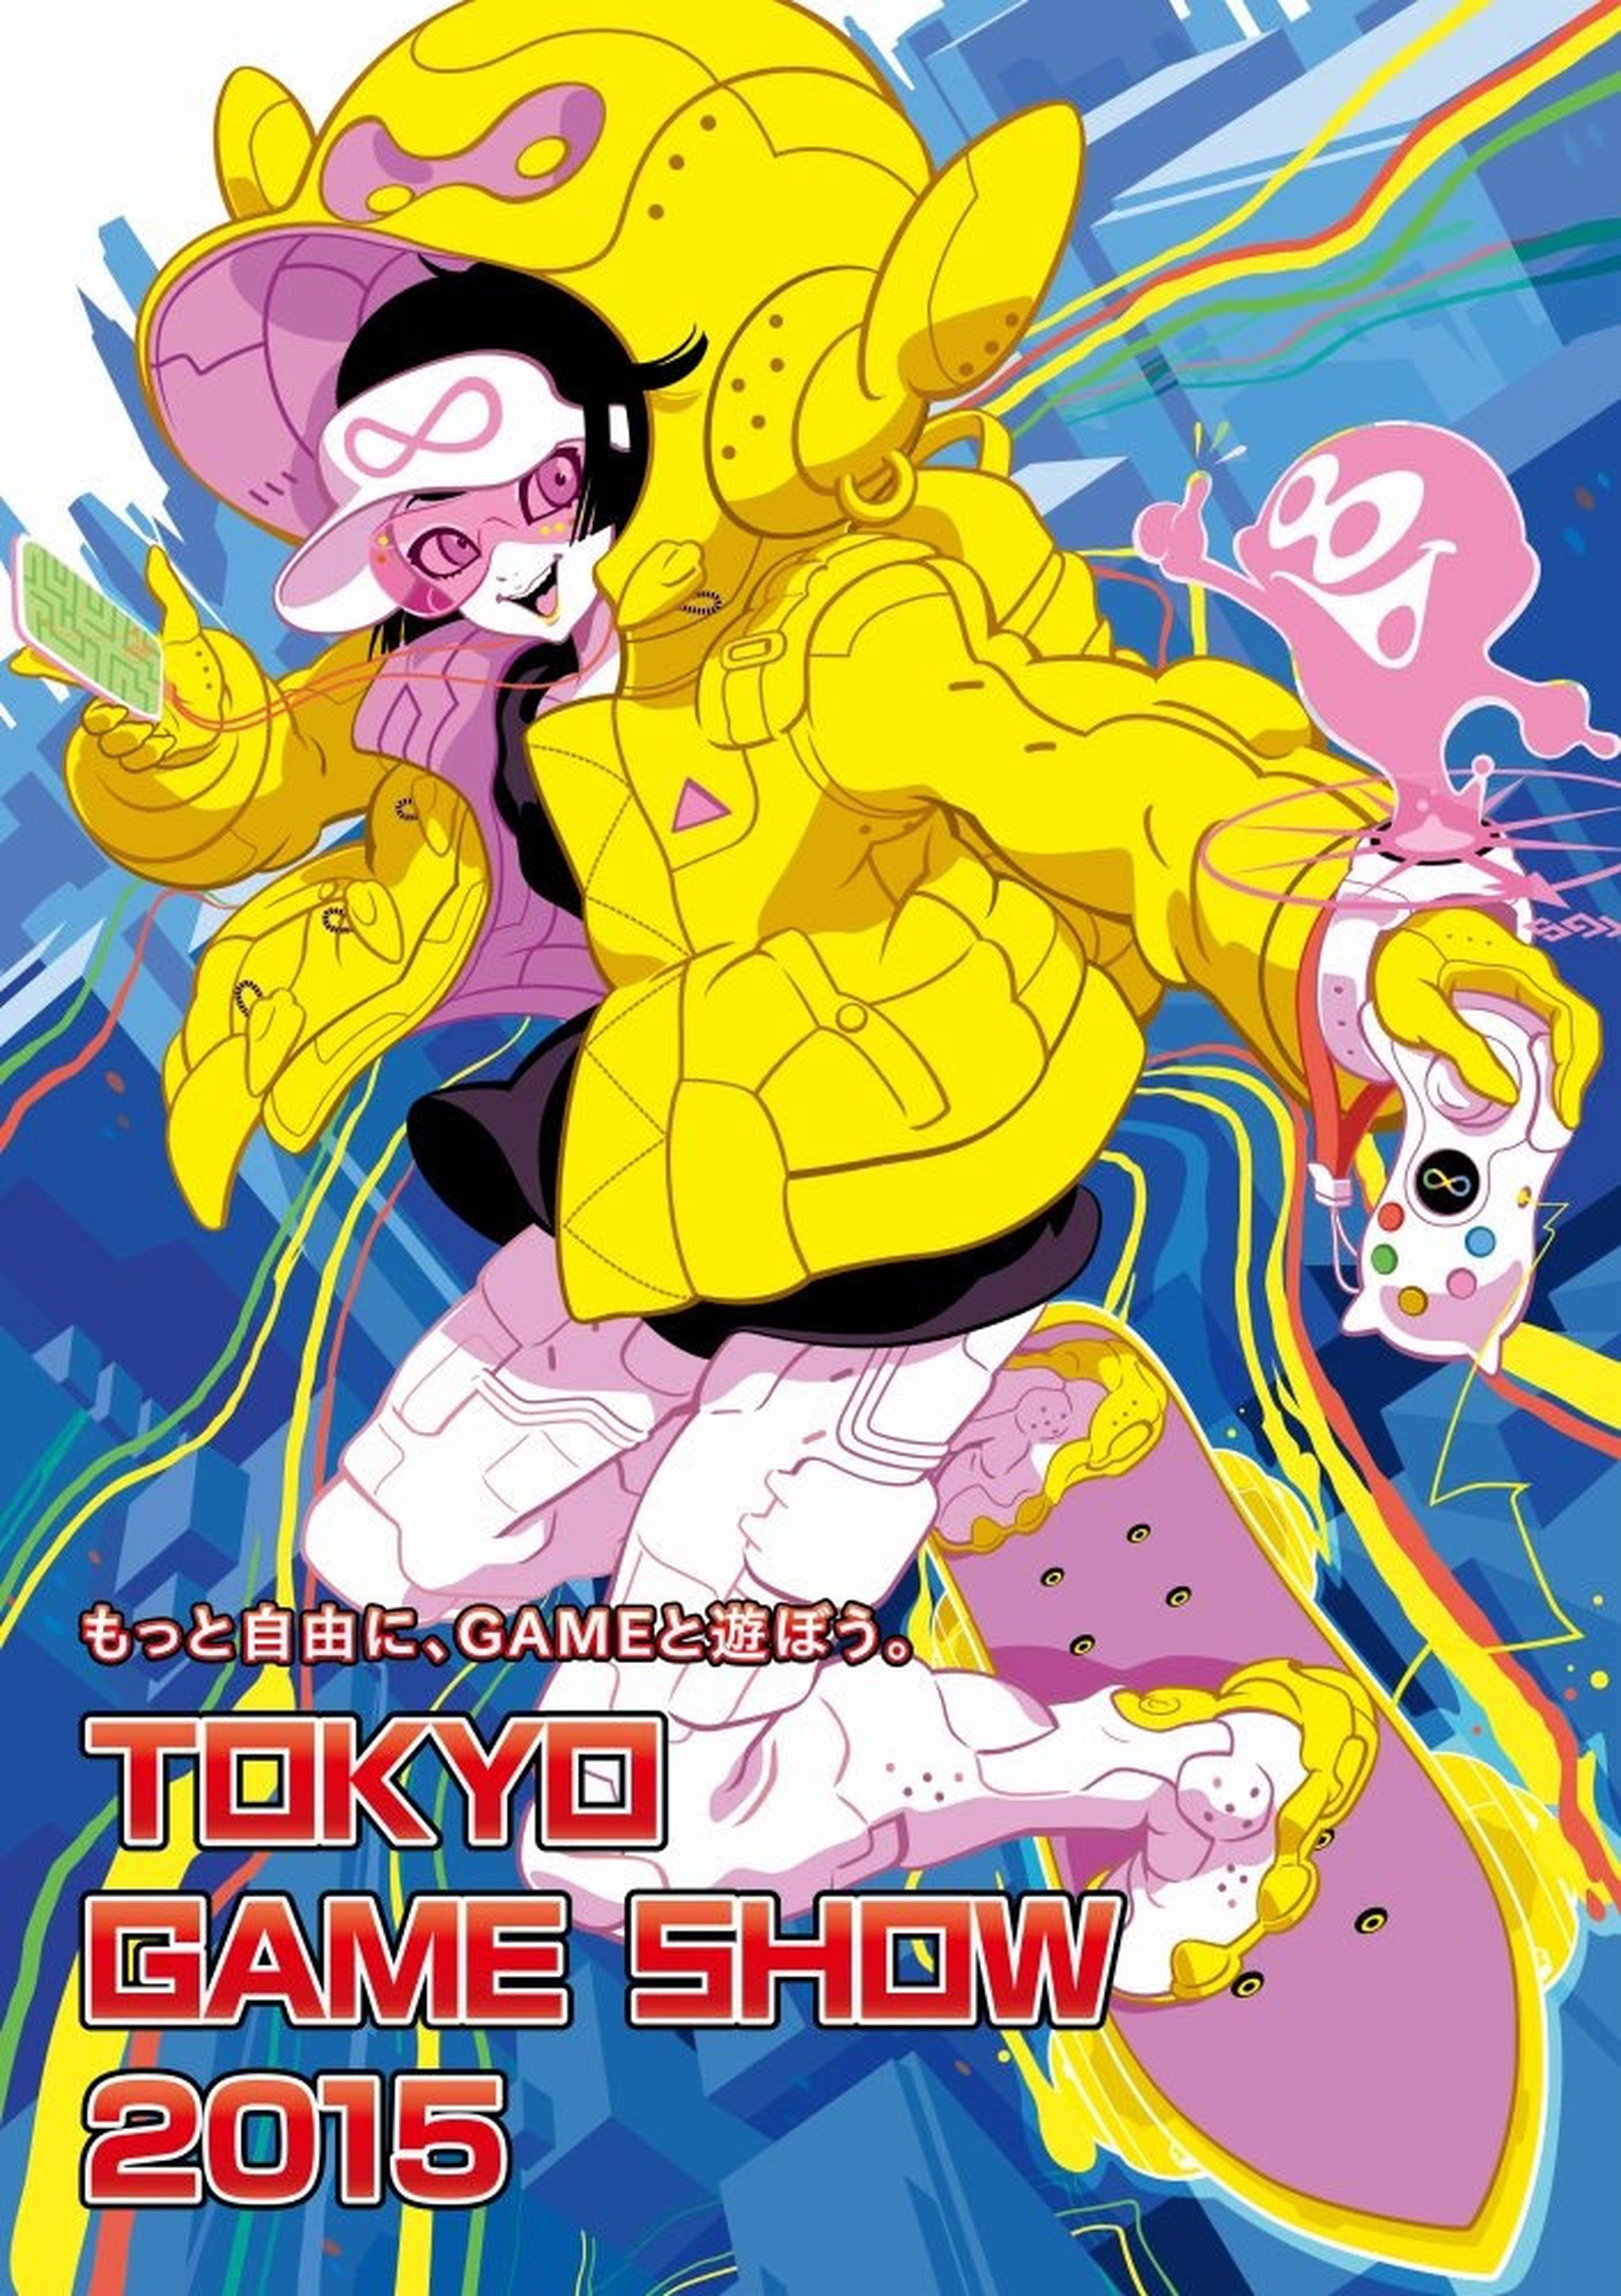 Tokyo Game Show 2015 muestra su cartel